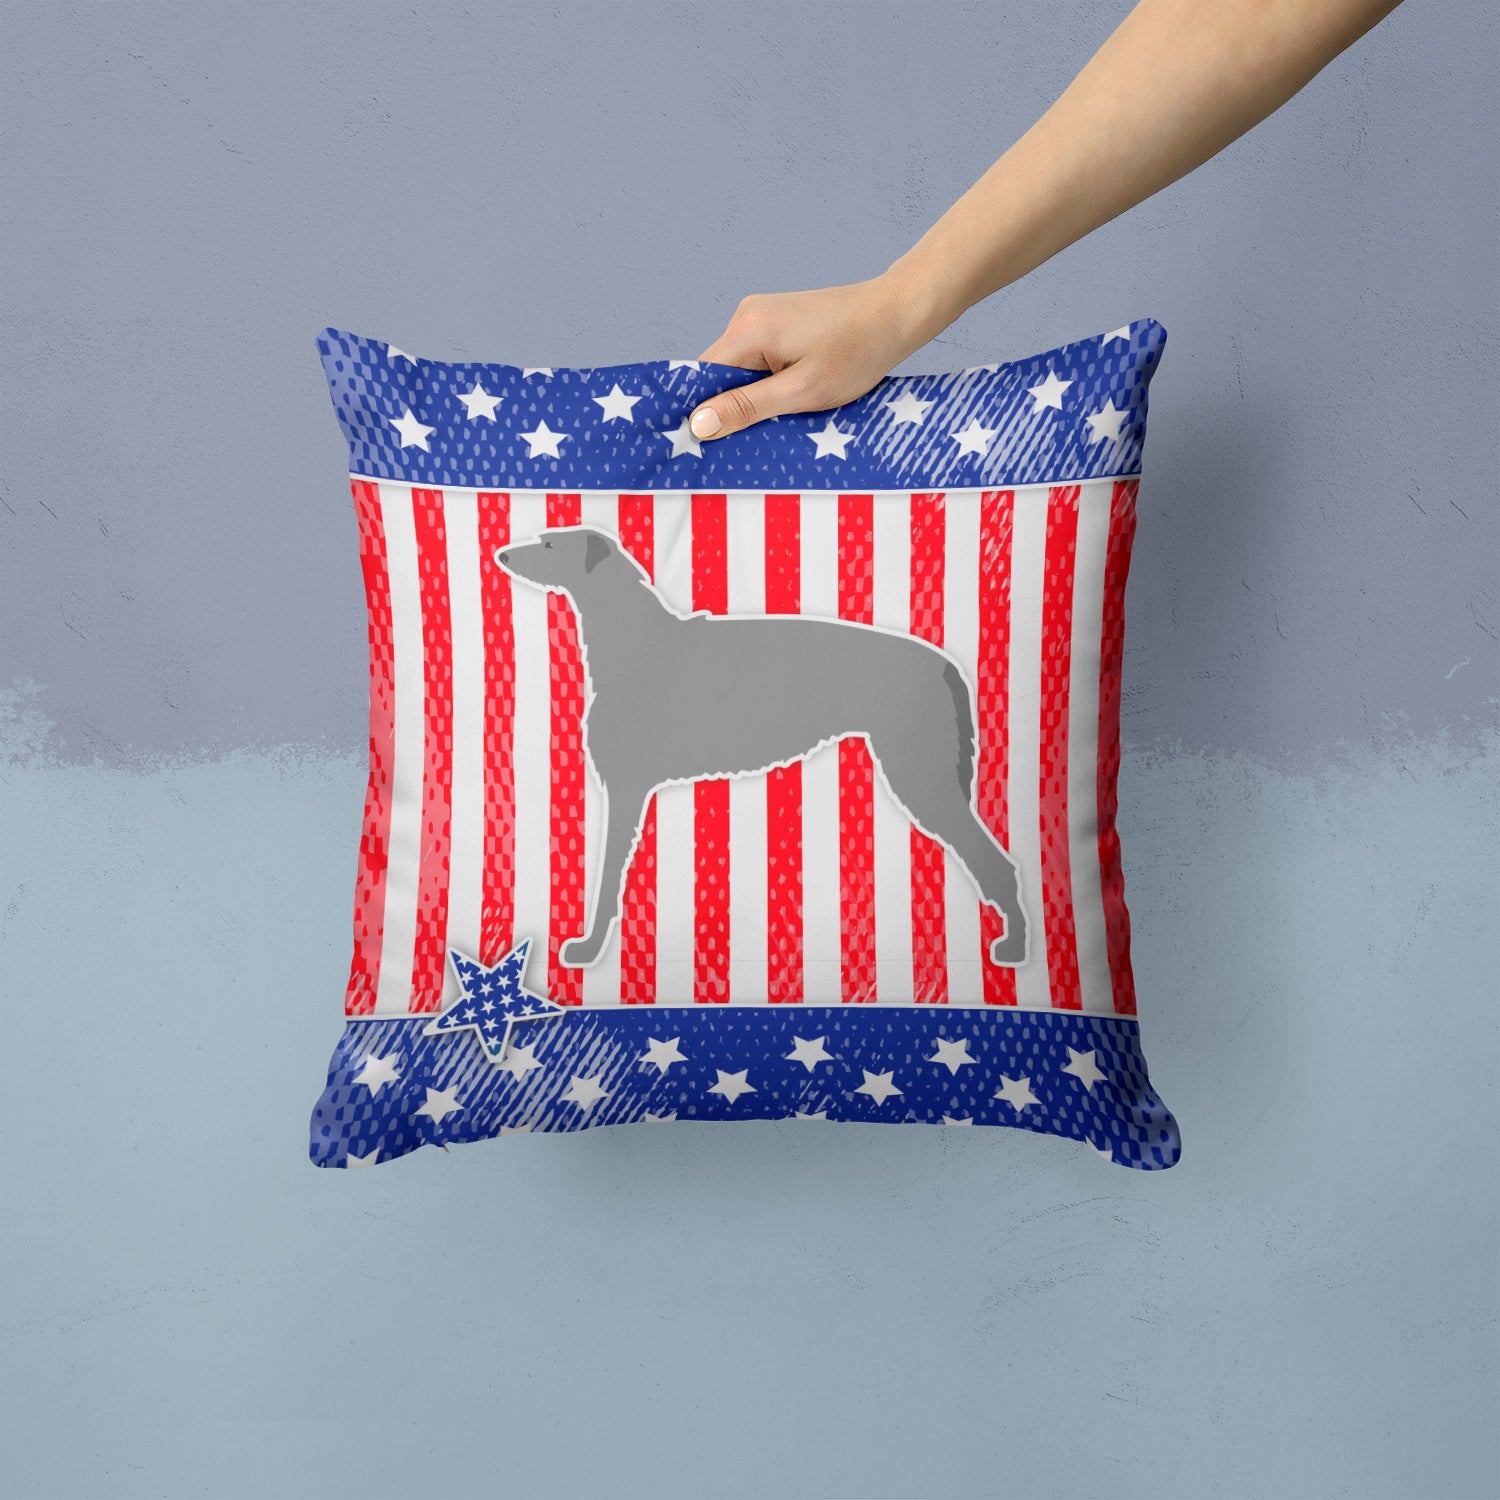 USA Patriotic Scottish Deerhound Fabric Decorative Pillow BB3296PW1414 - the-store.com